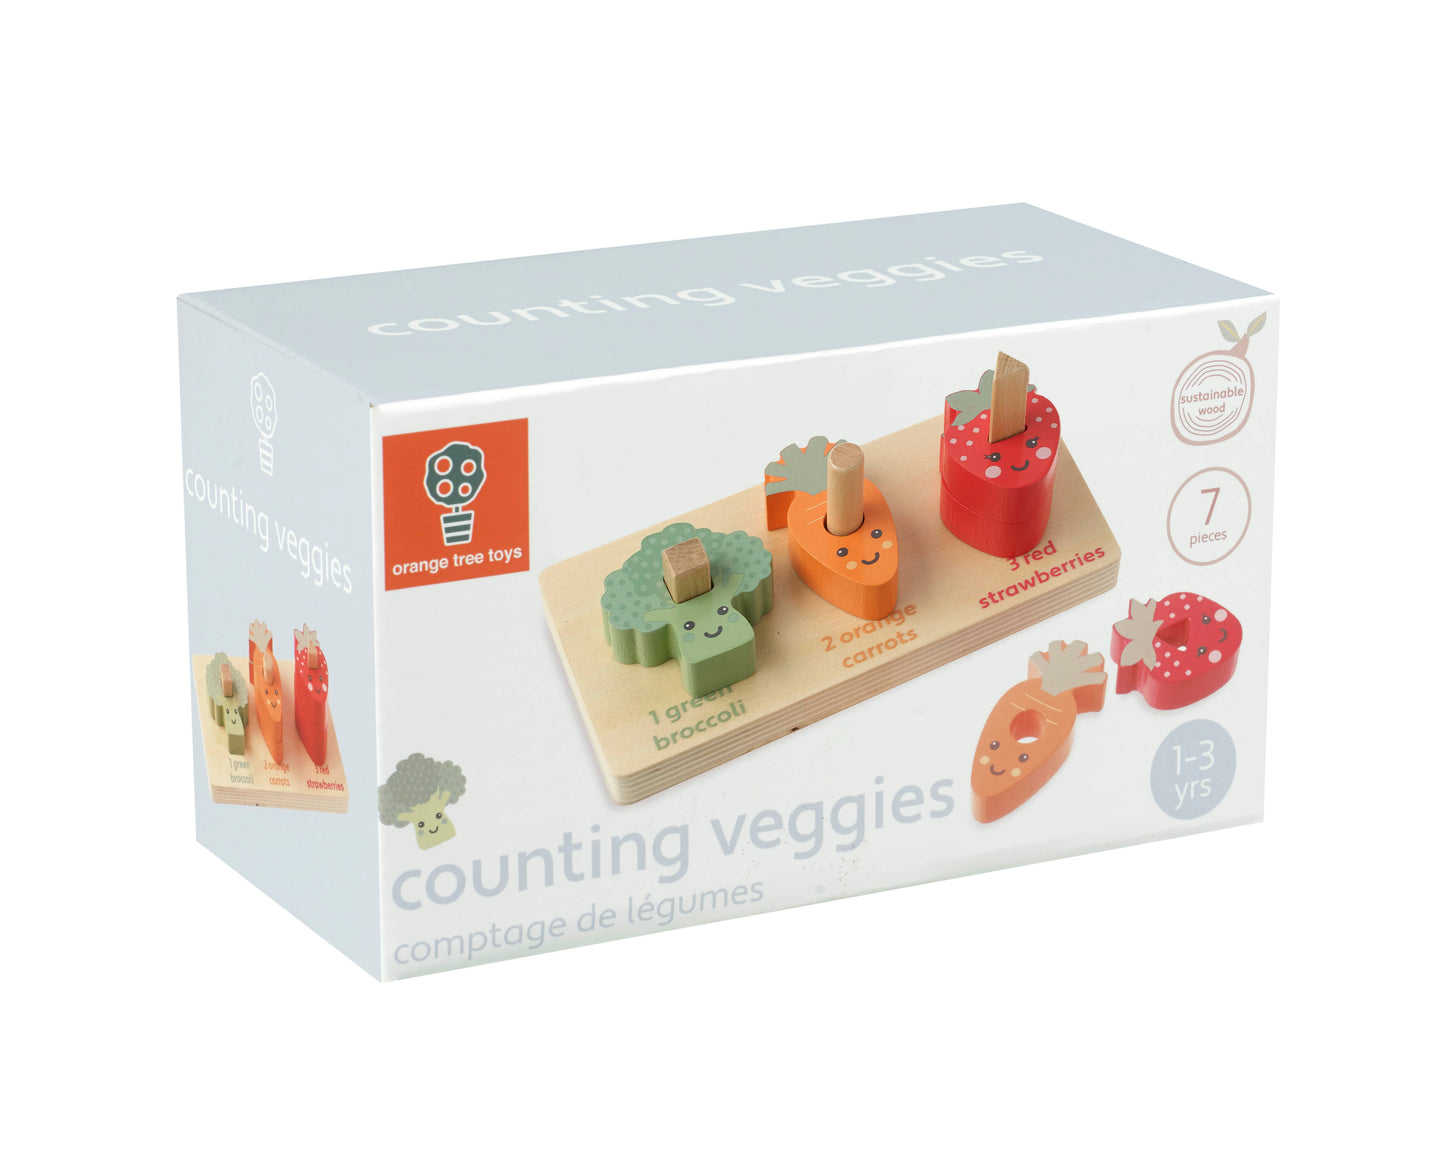 Orange Tree Toys Counting Veggies